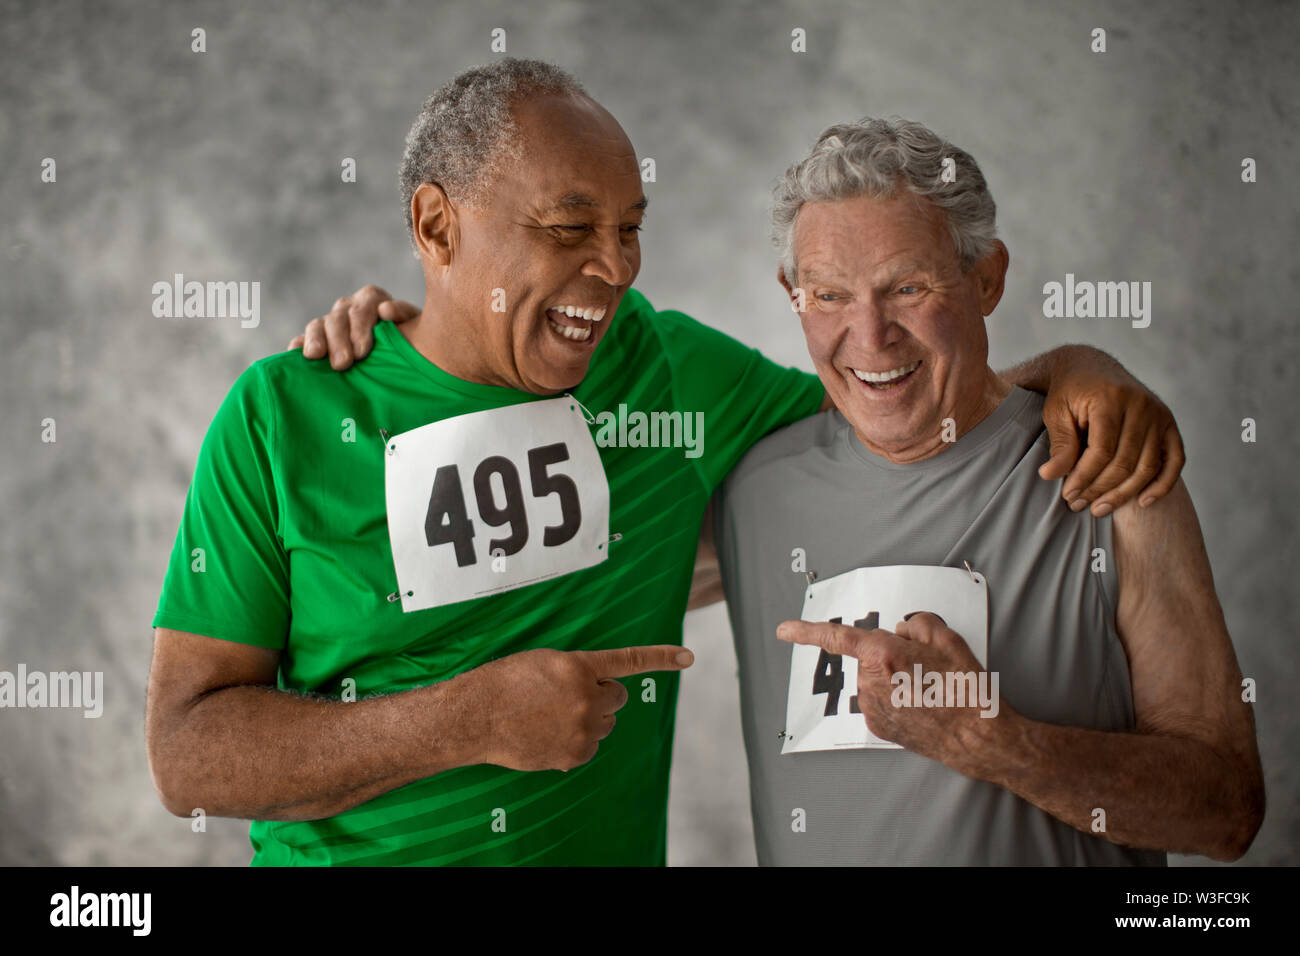 Portrait of two smiling senior men. Stock Photo